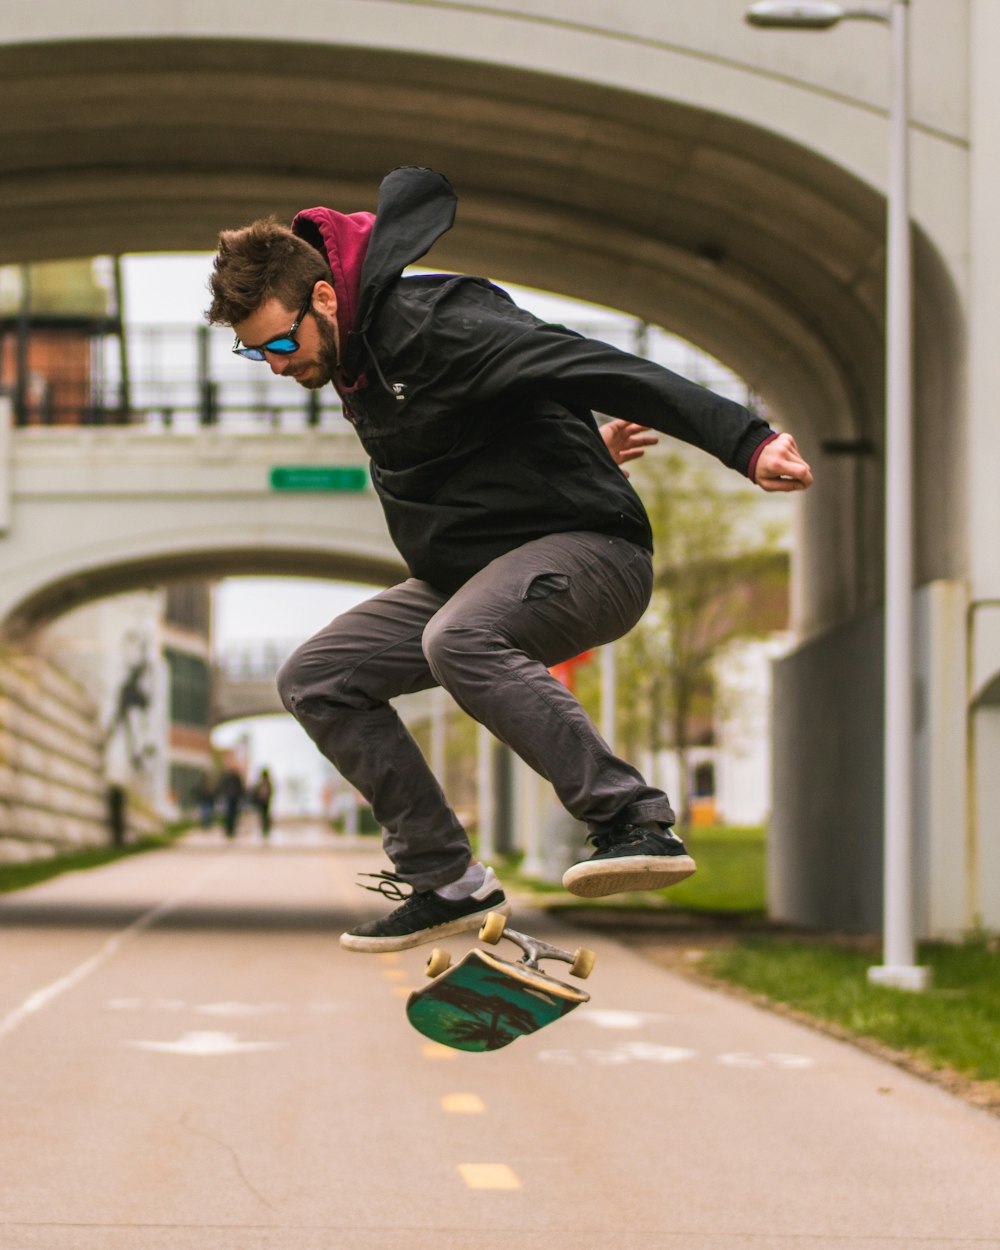 man doing trick on skateboard